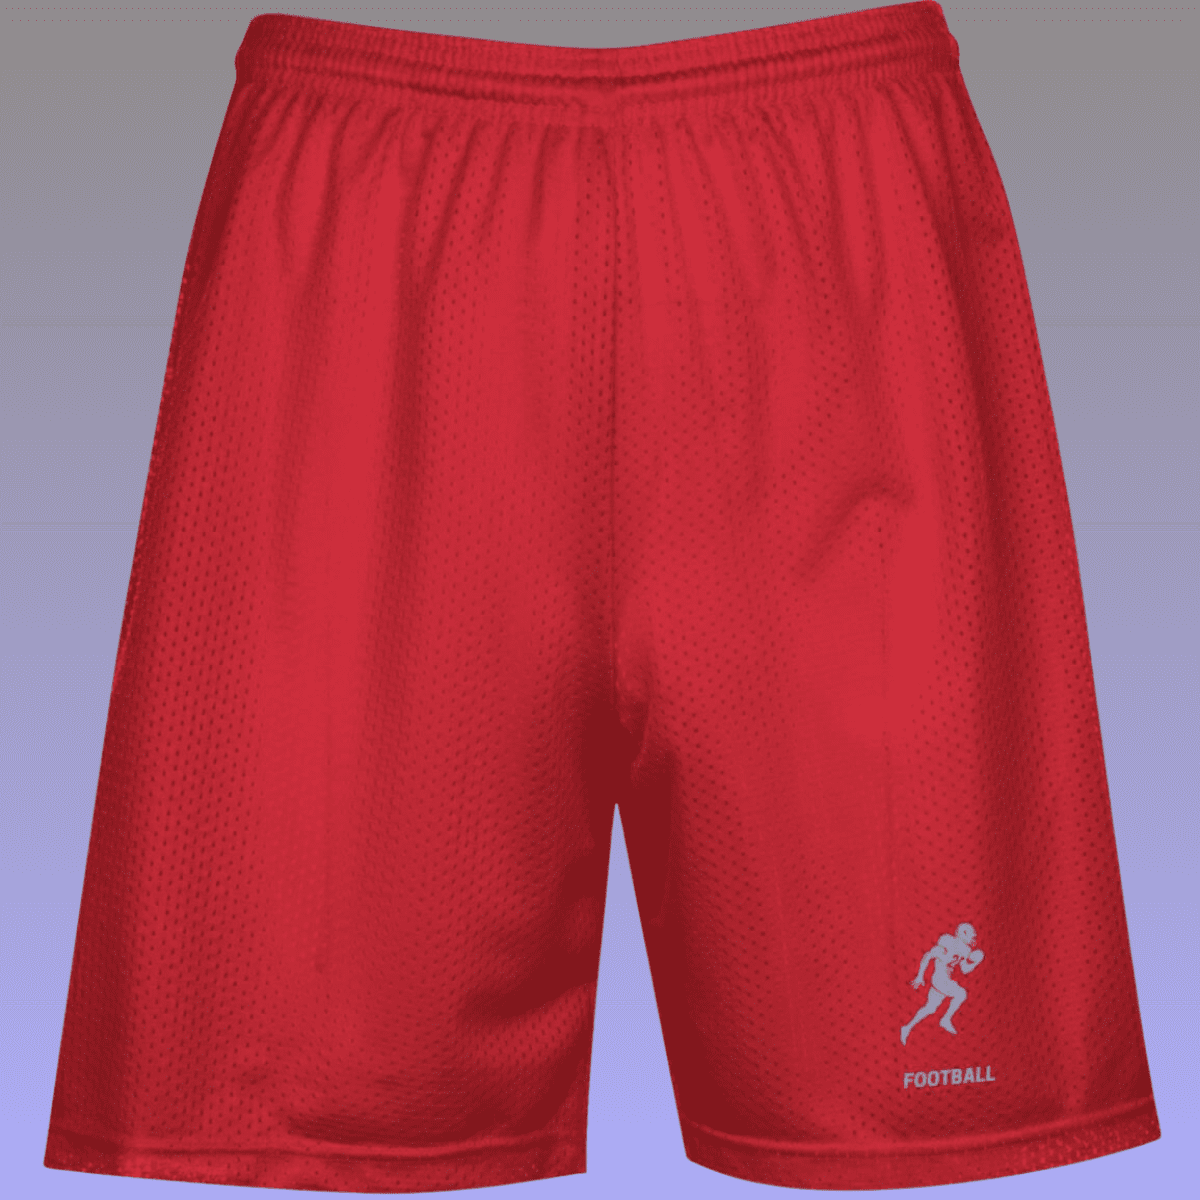 Men's Red American Football Performance Mesh Shorts